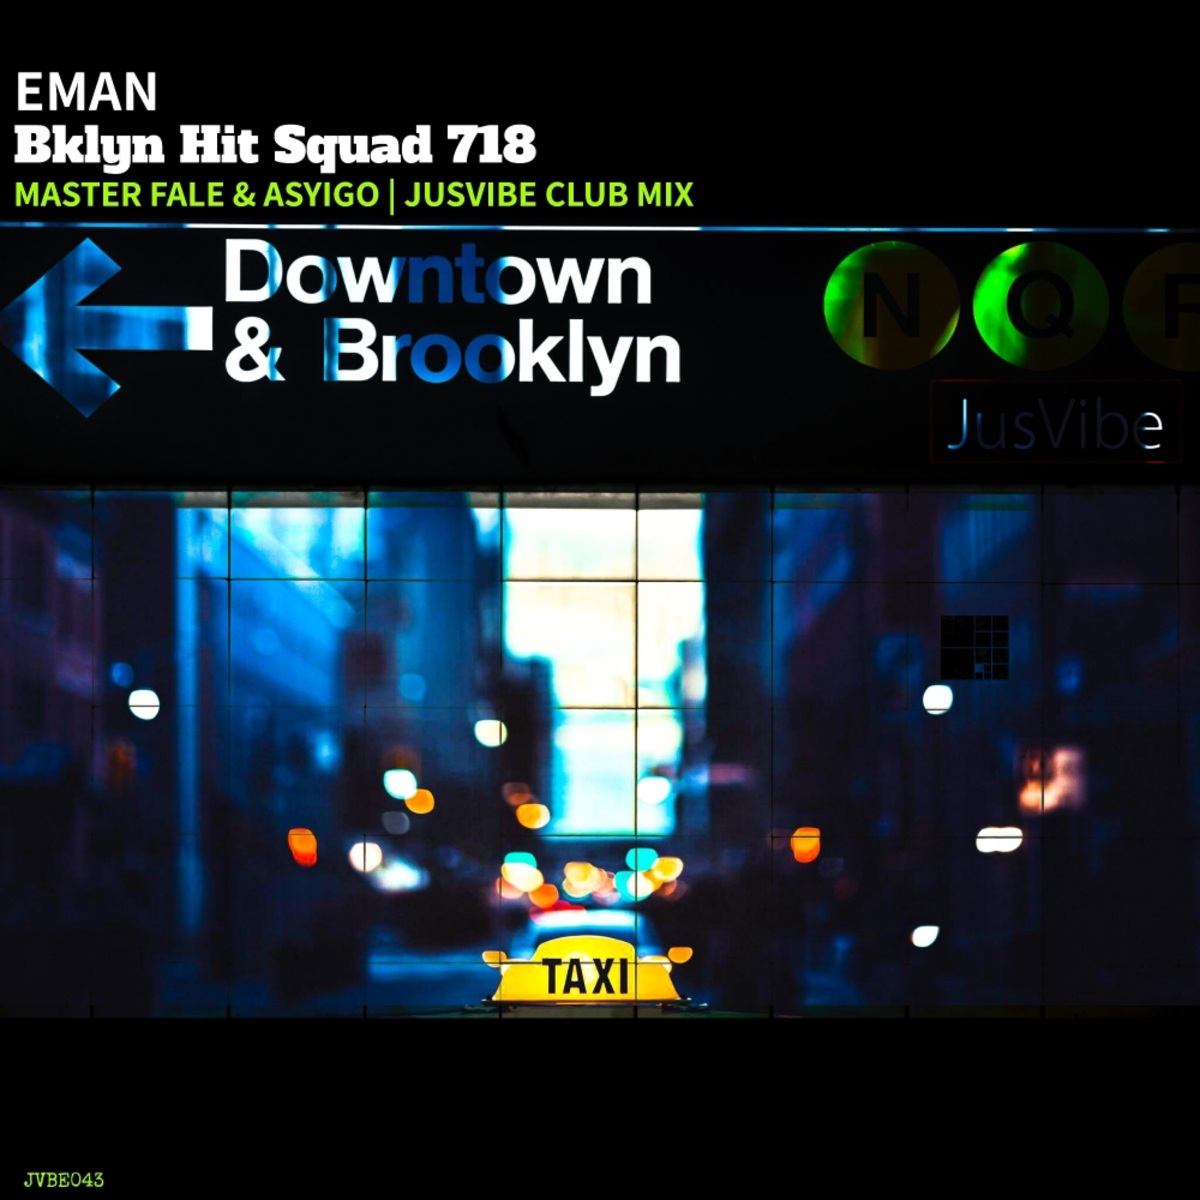 Eman - Bklyn Hit Squad 718 / JusVibe